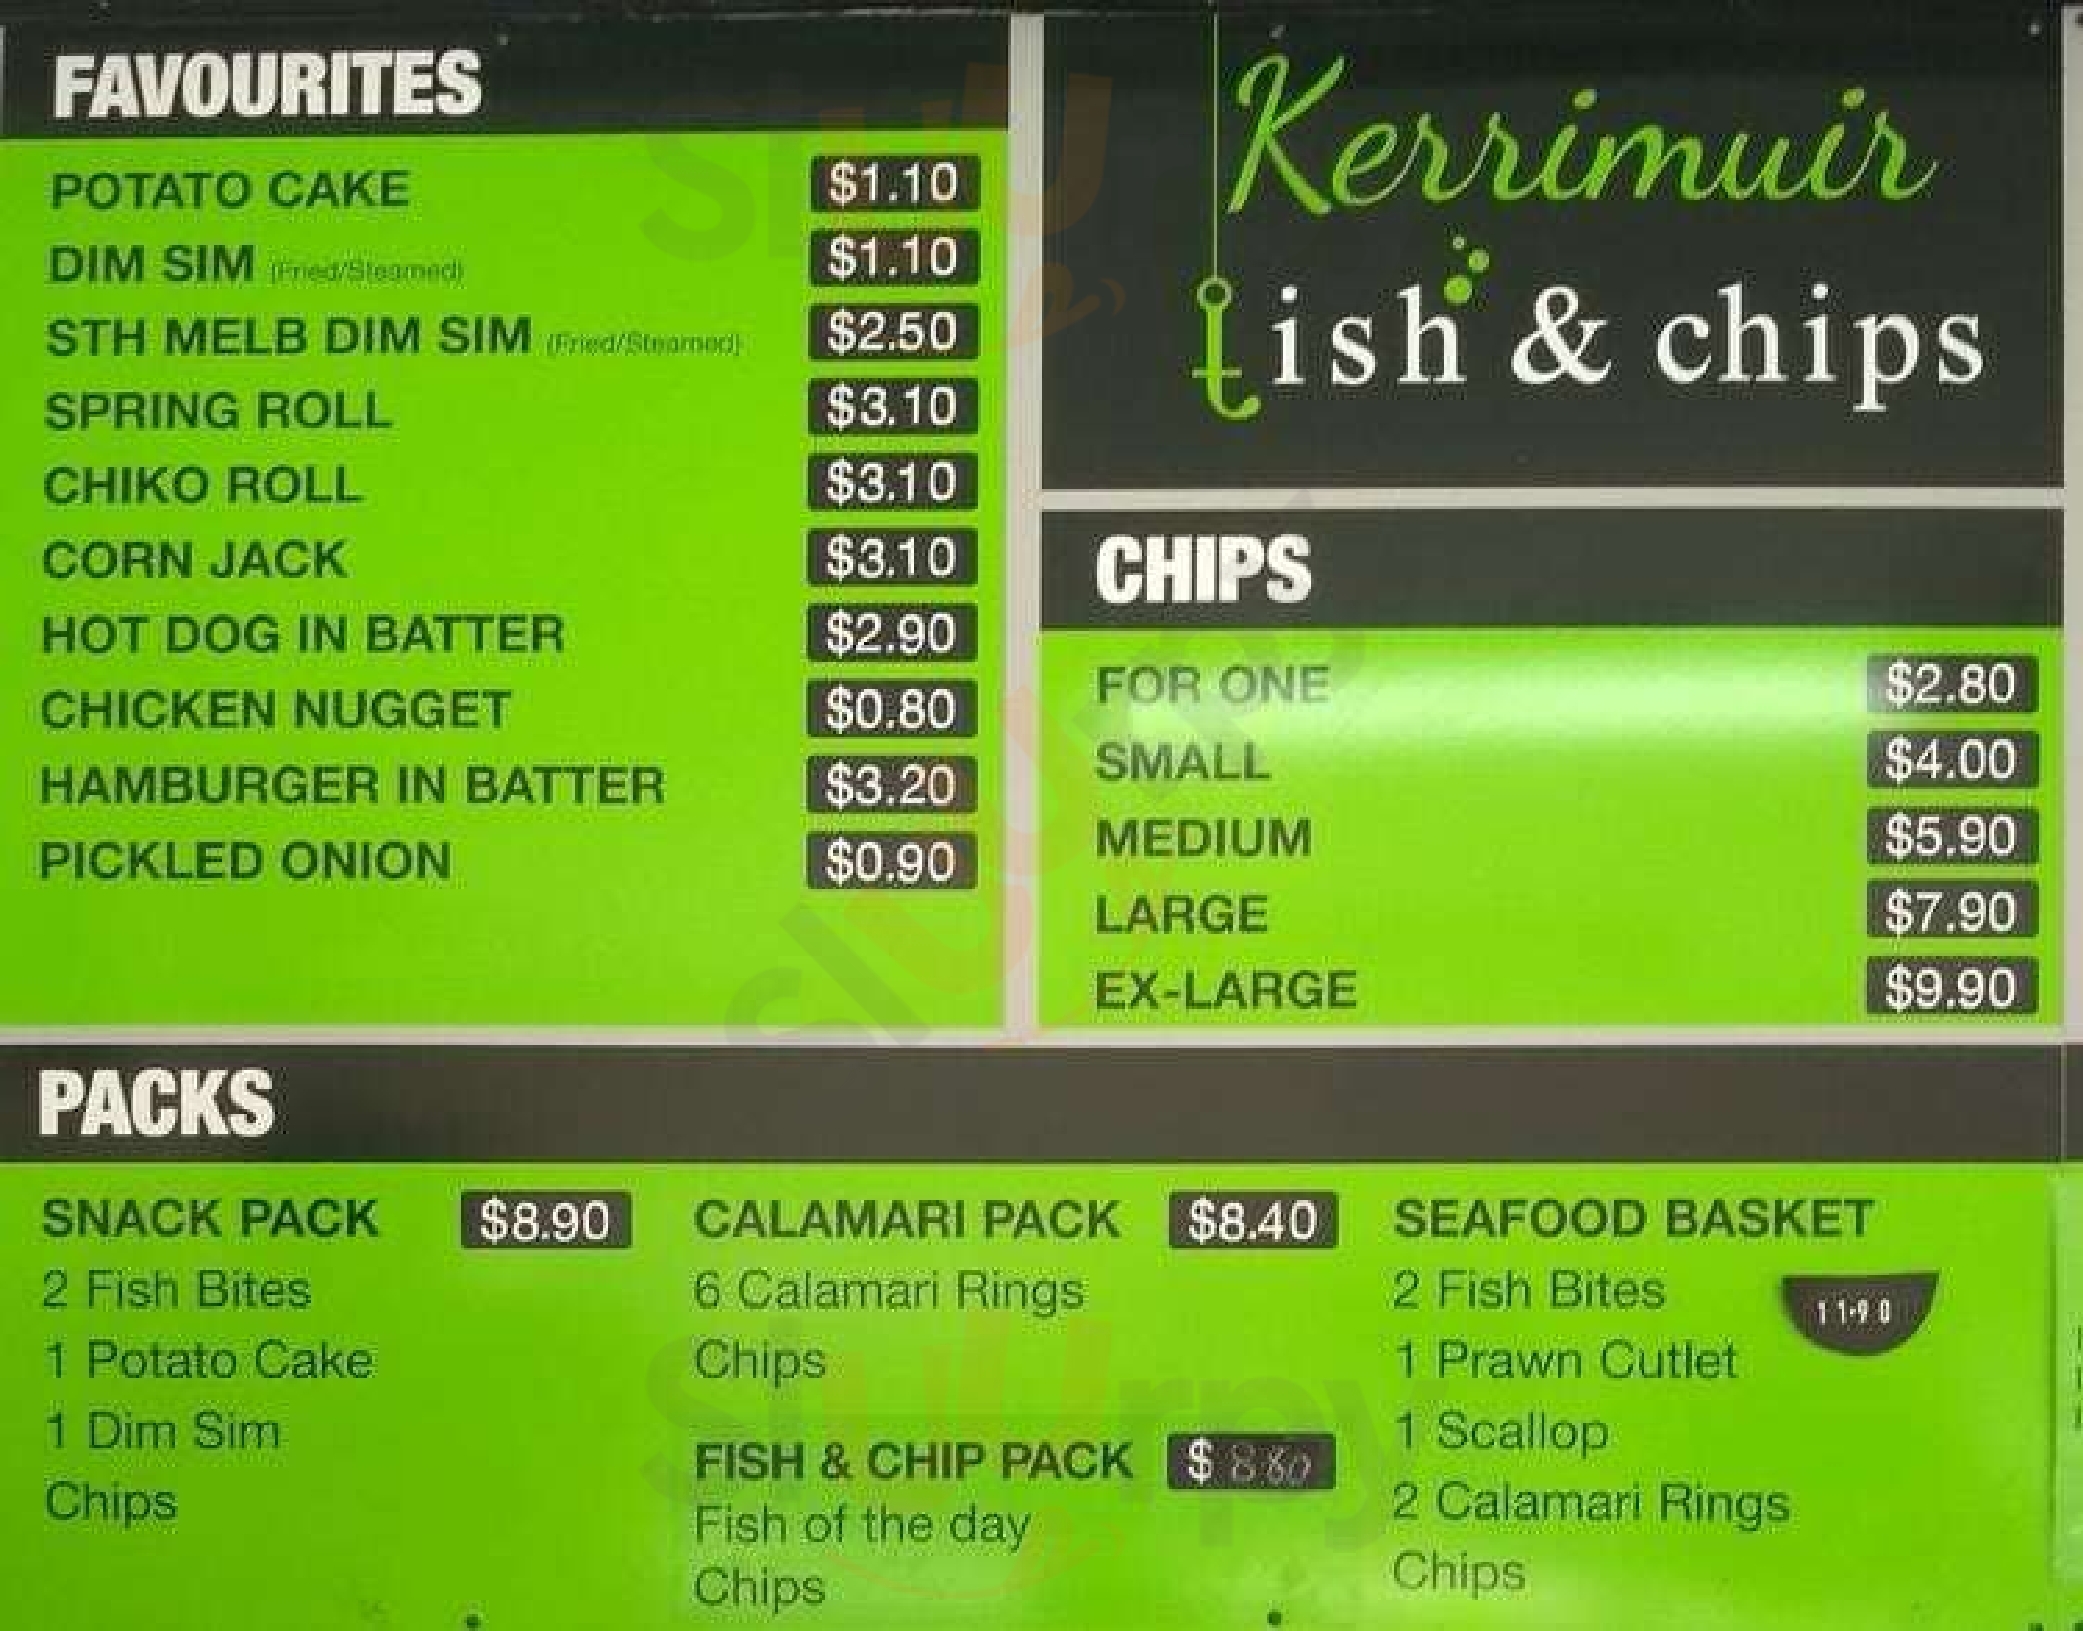 Kerrimuir Fish Shop Box Hill Menu - 1